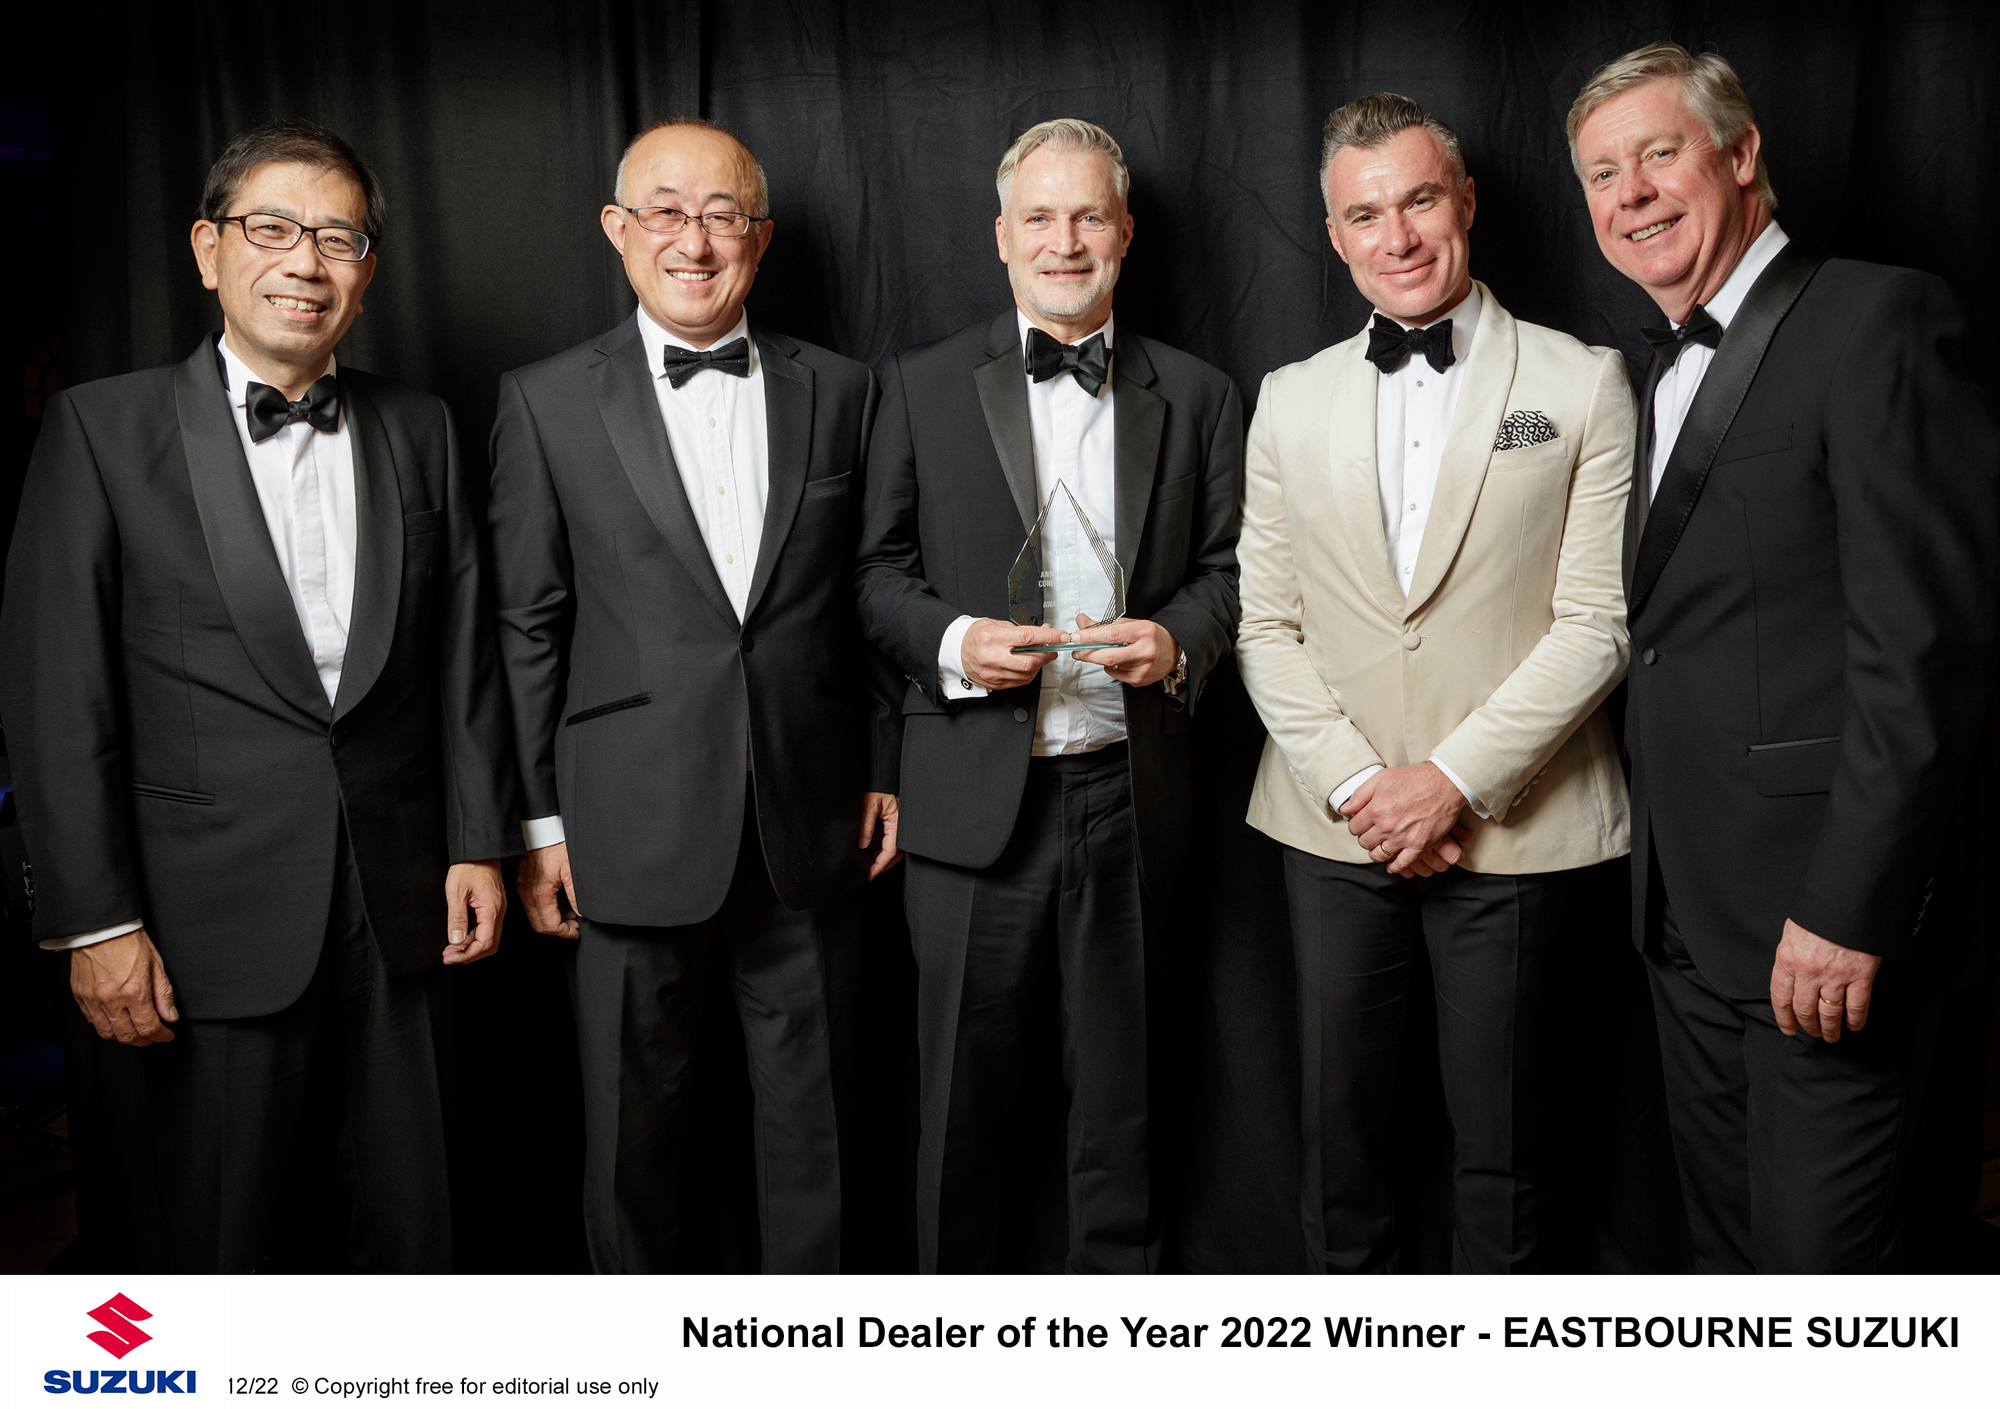 Eastbourne Suzuki National Dealer of the Year 2022 Winner